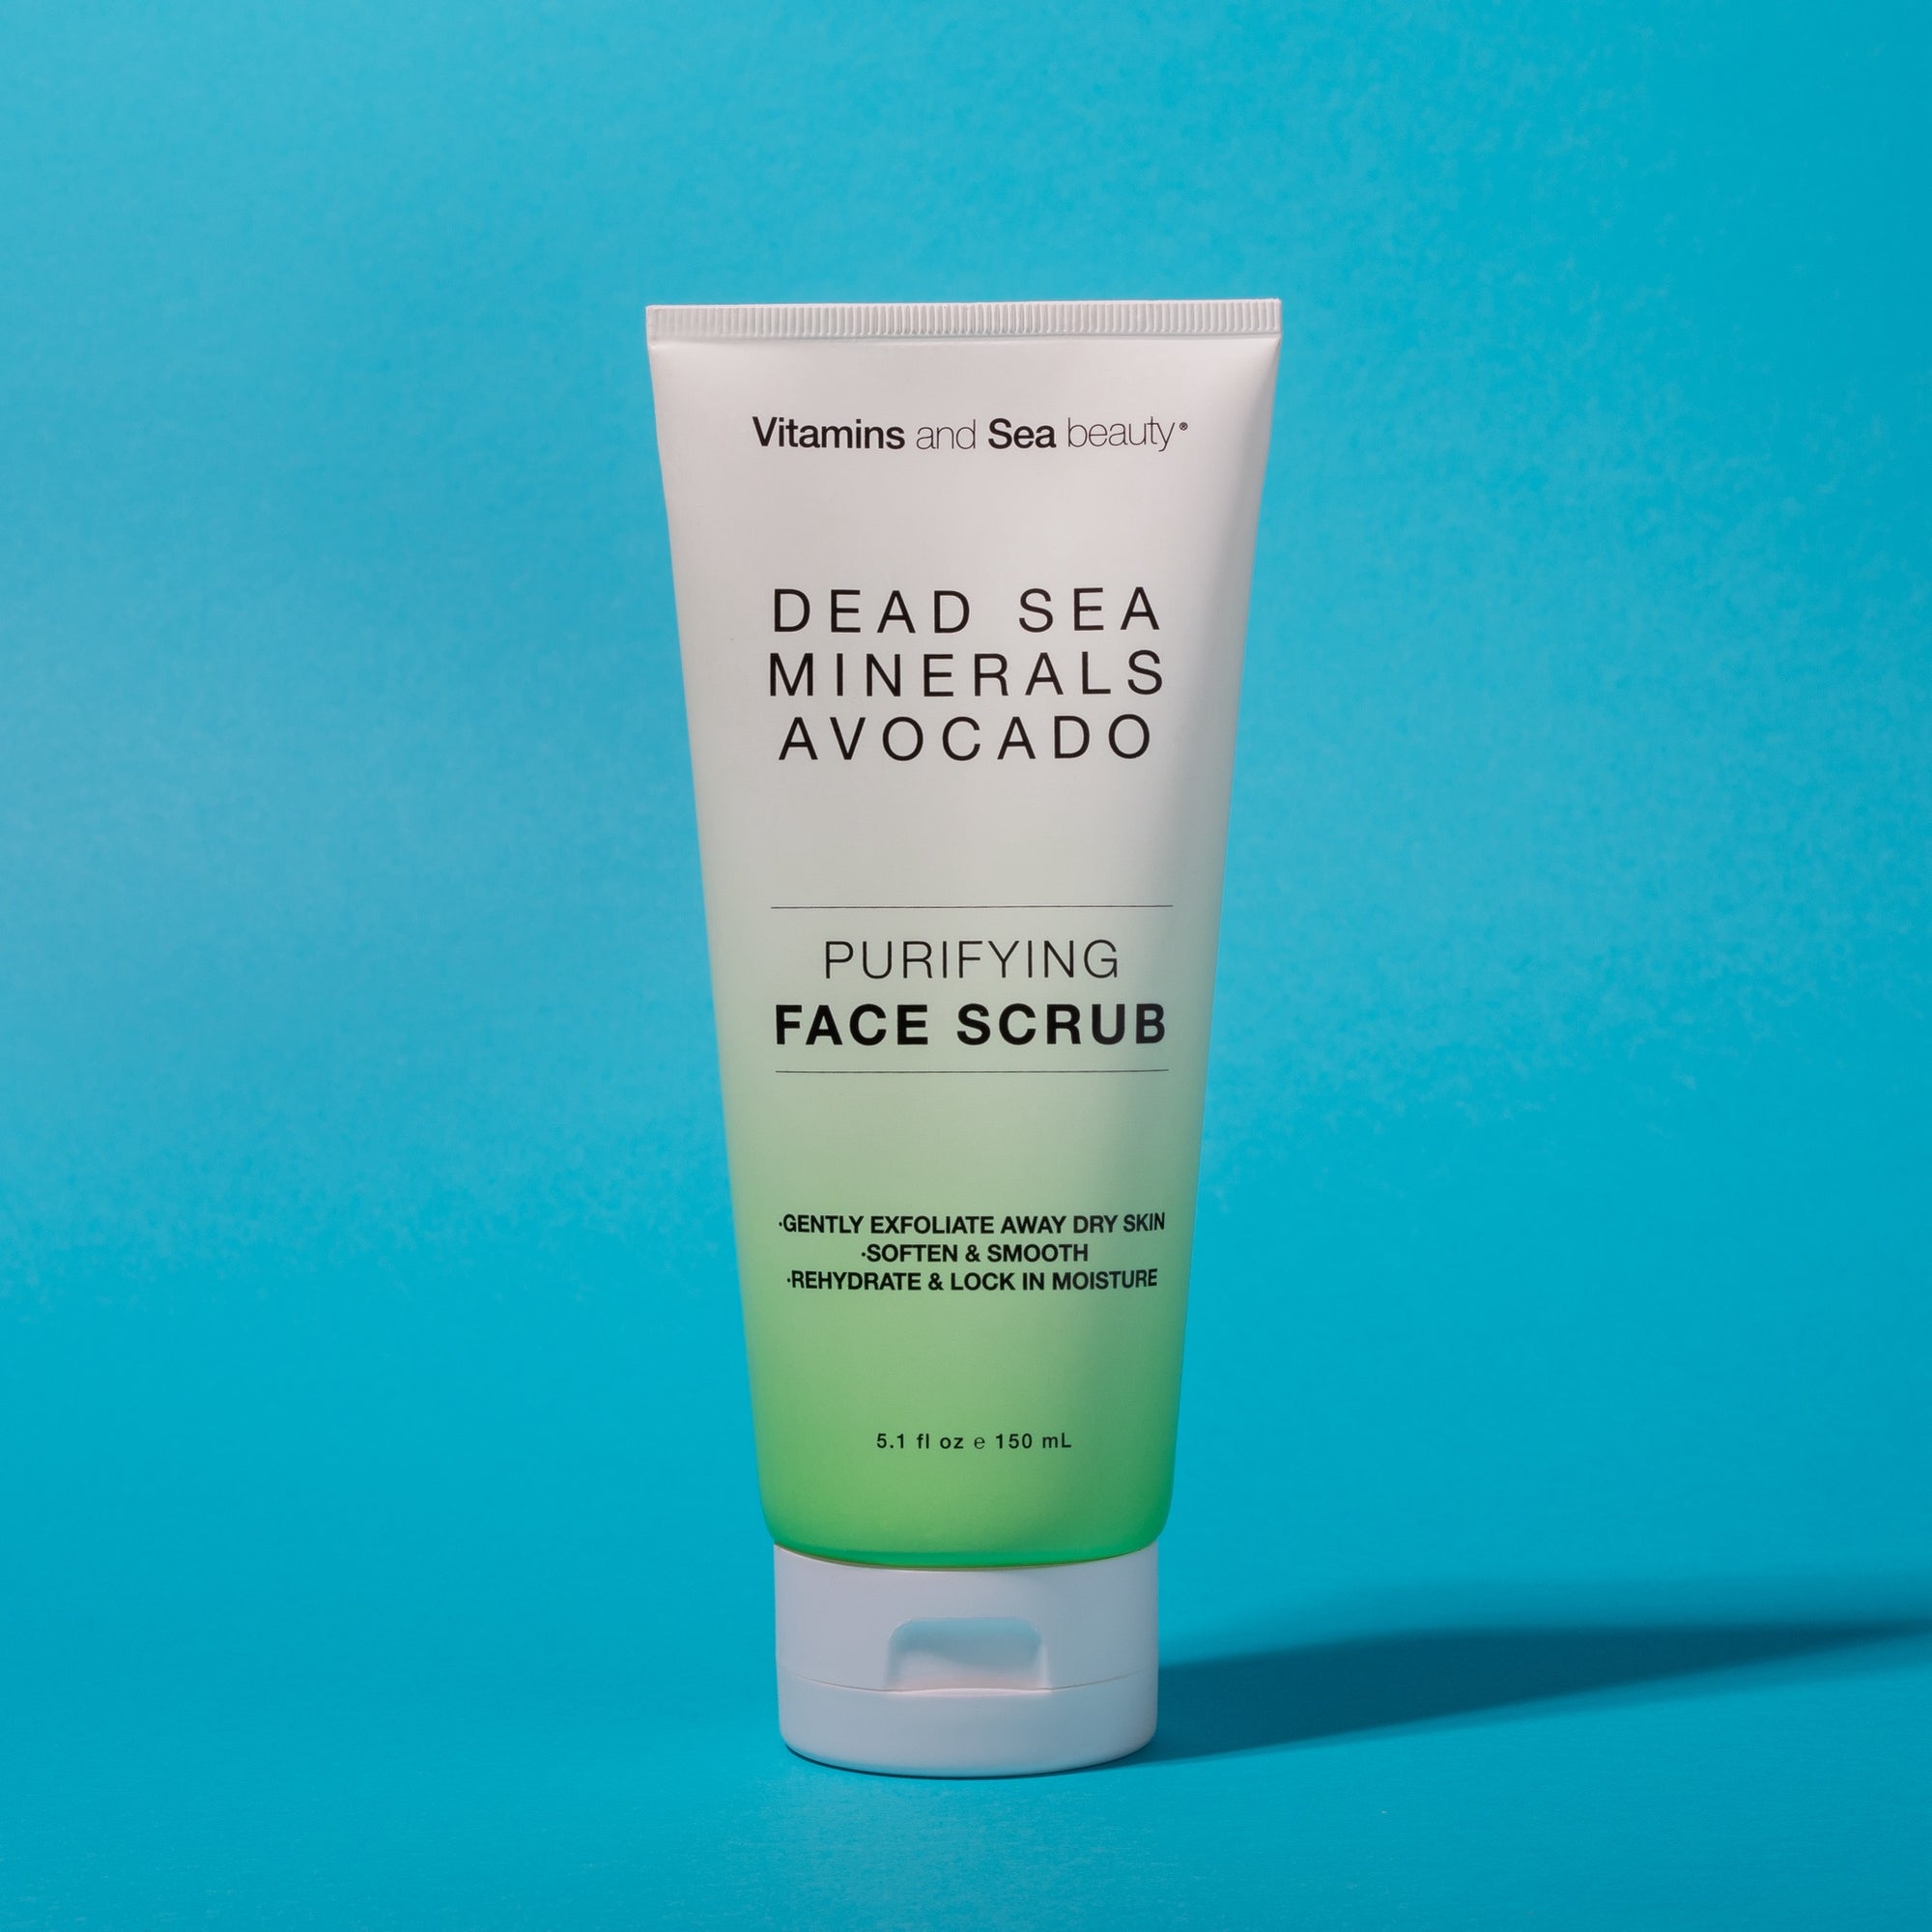 Dead Sea Minerals + Avocado Purifying Facial Scrub